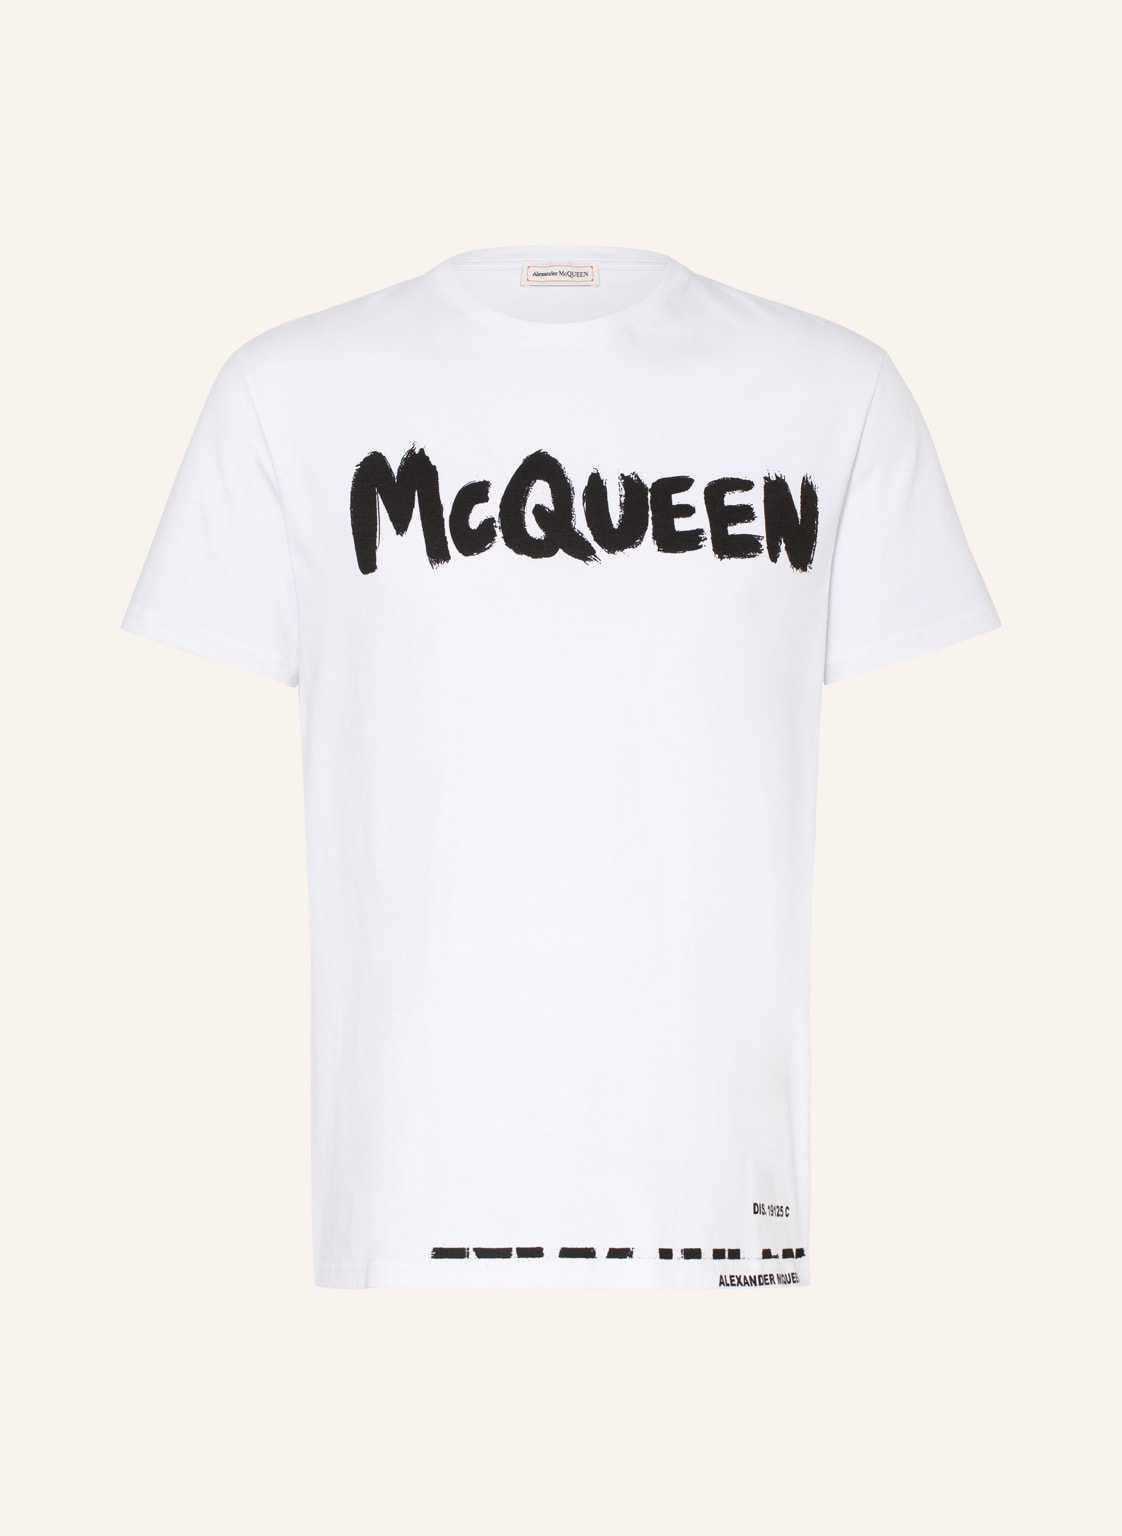 Alexander Mcqueen T-Shirt weiss von alexander mcqueen